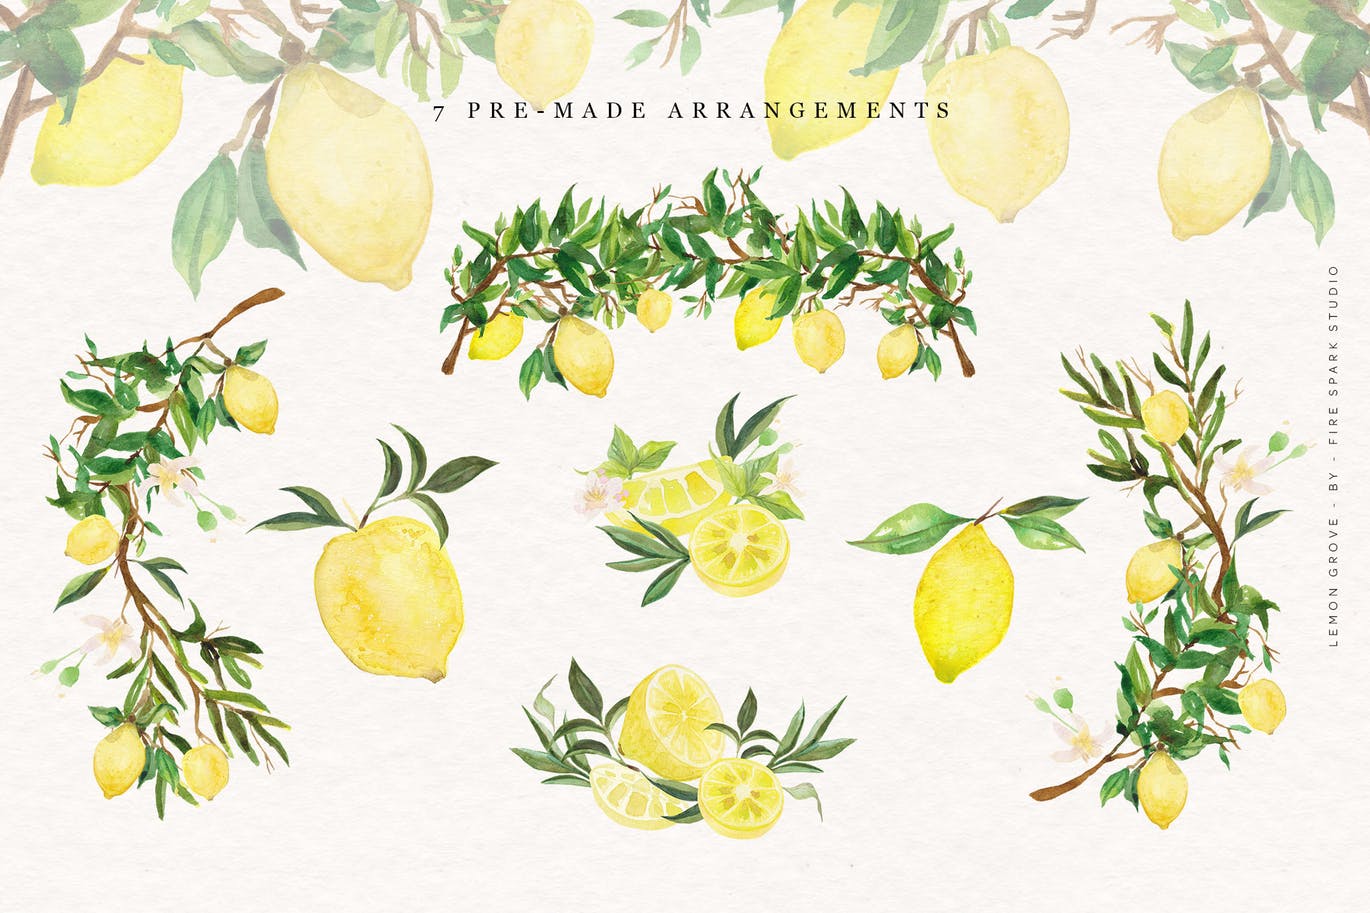 柠檬树水彩手绘矢量插画素材库精选素材 Lemon Grove Watercolor Illustrations插图(5)